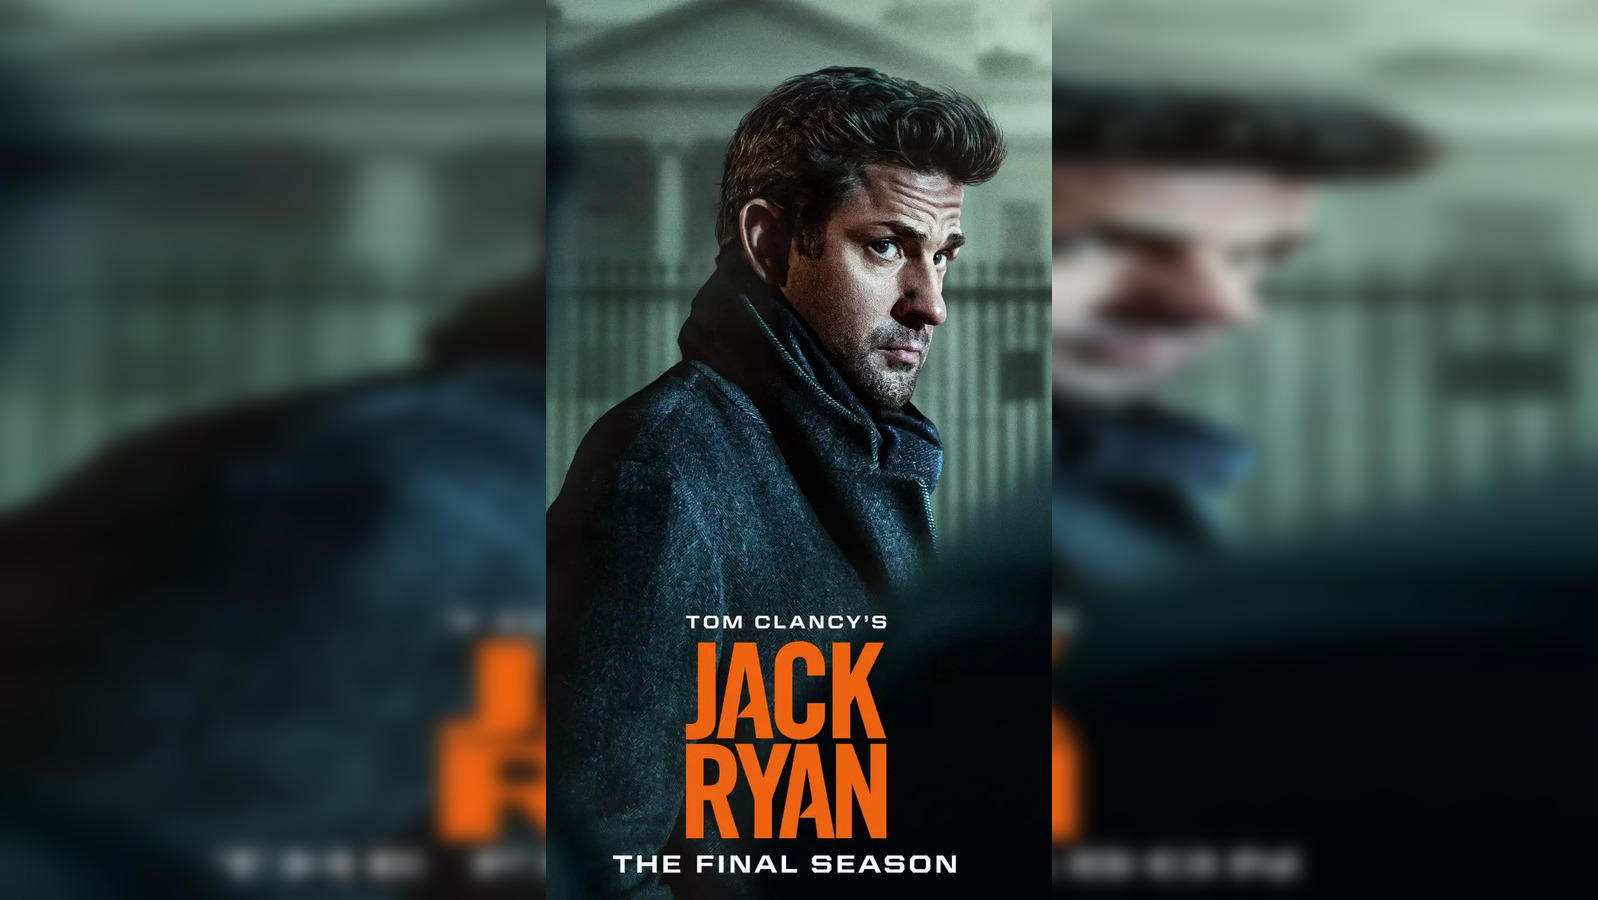 Krasinski's 'Jack Ryan' returns to TV after 3-year wait